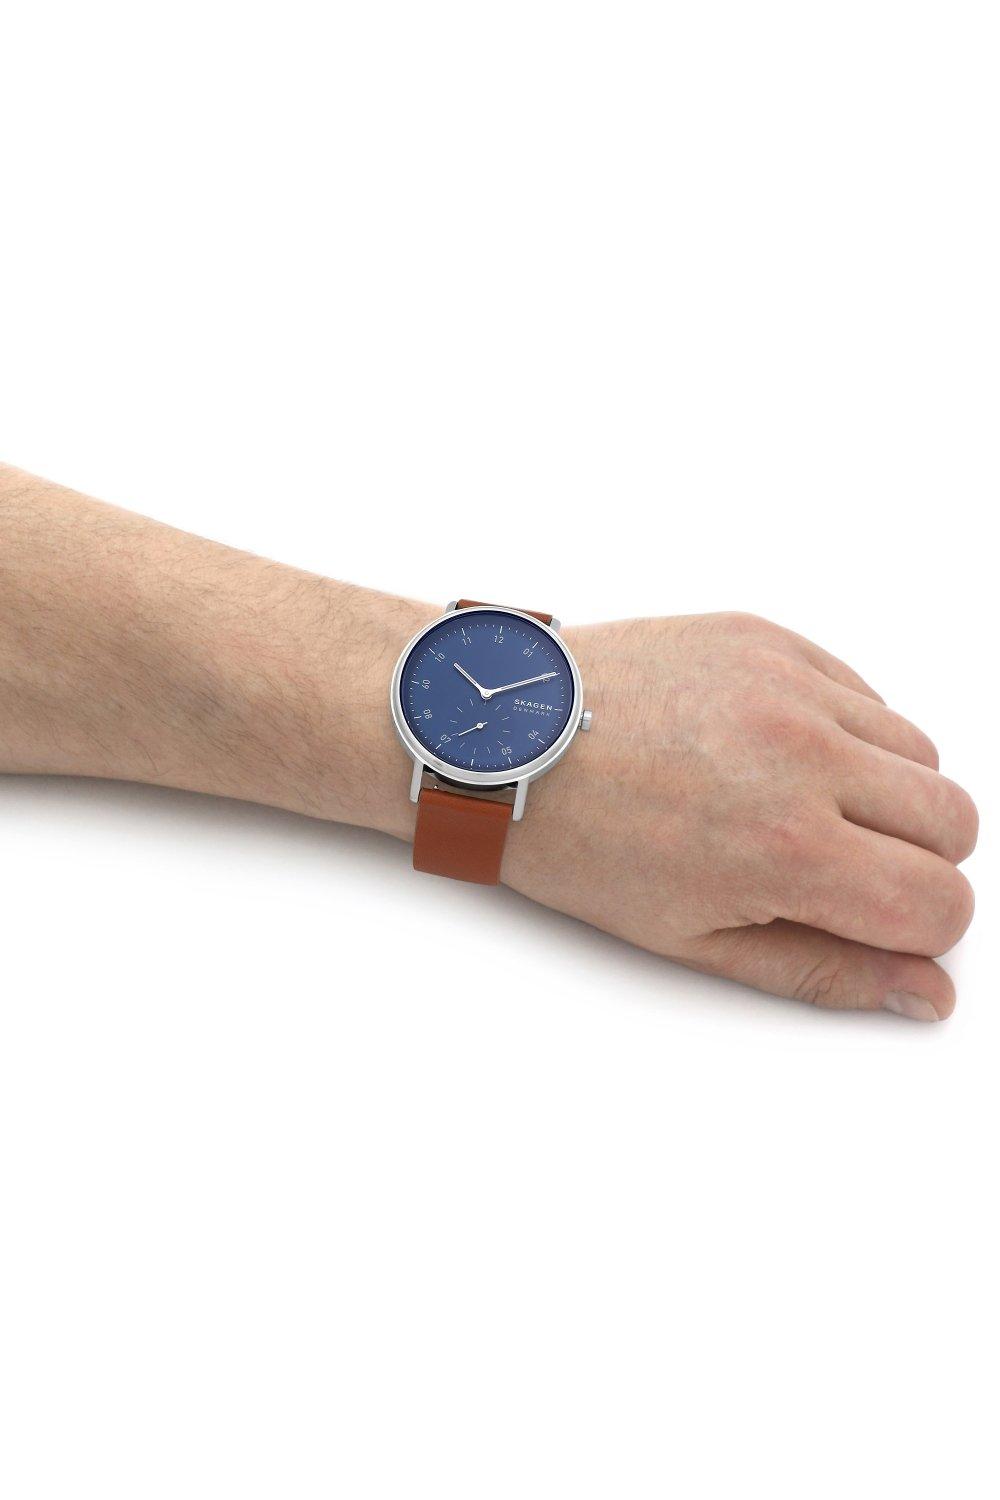 Watches | Kuppel Stainless Steel Classic Analogue Quartz Watch - Skw6888 |  Skagen